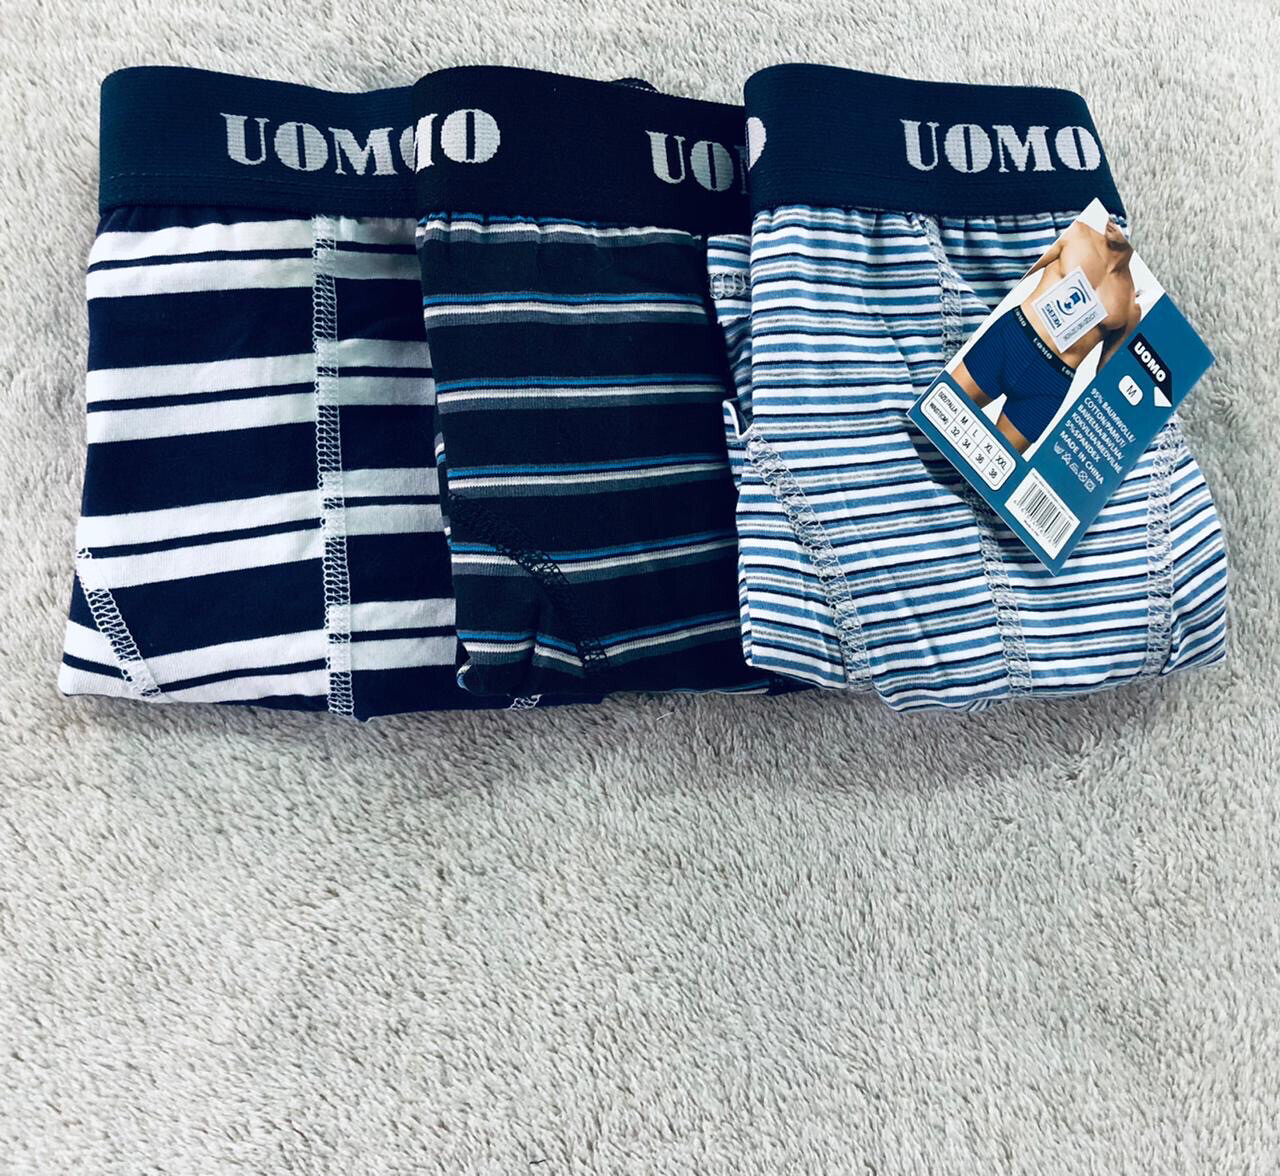 Uomo Underwear Men’s Boxers - 3-Piece Pack, Medium